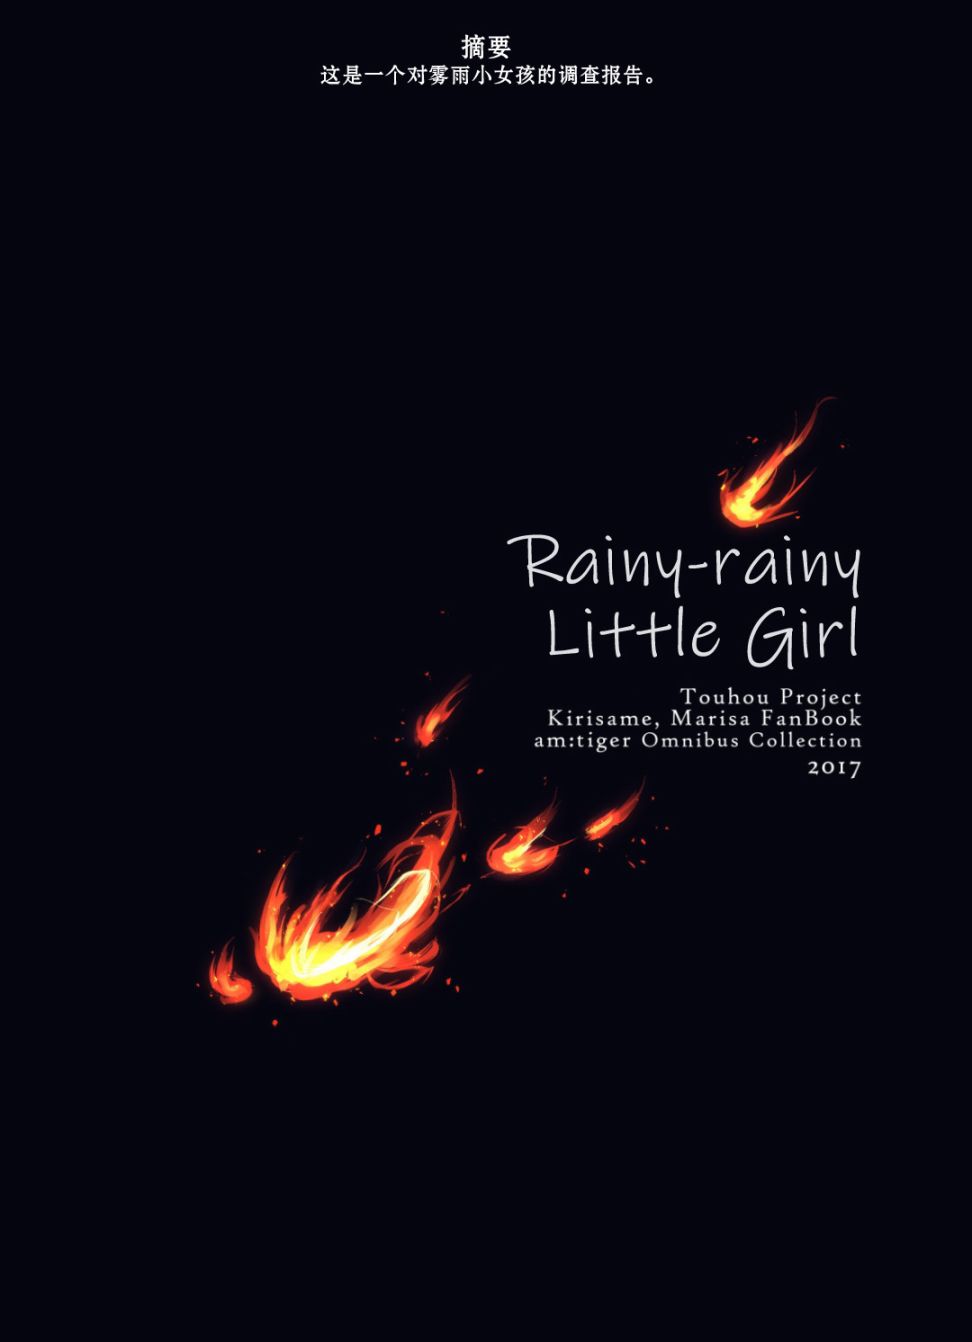 Rainy-rainy Little Girl - 短篇(1/7) - 5